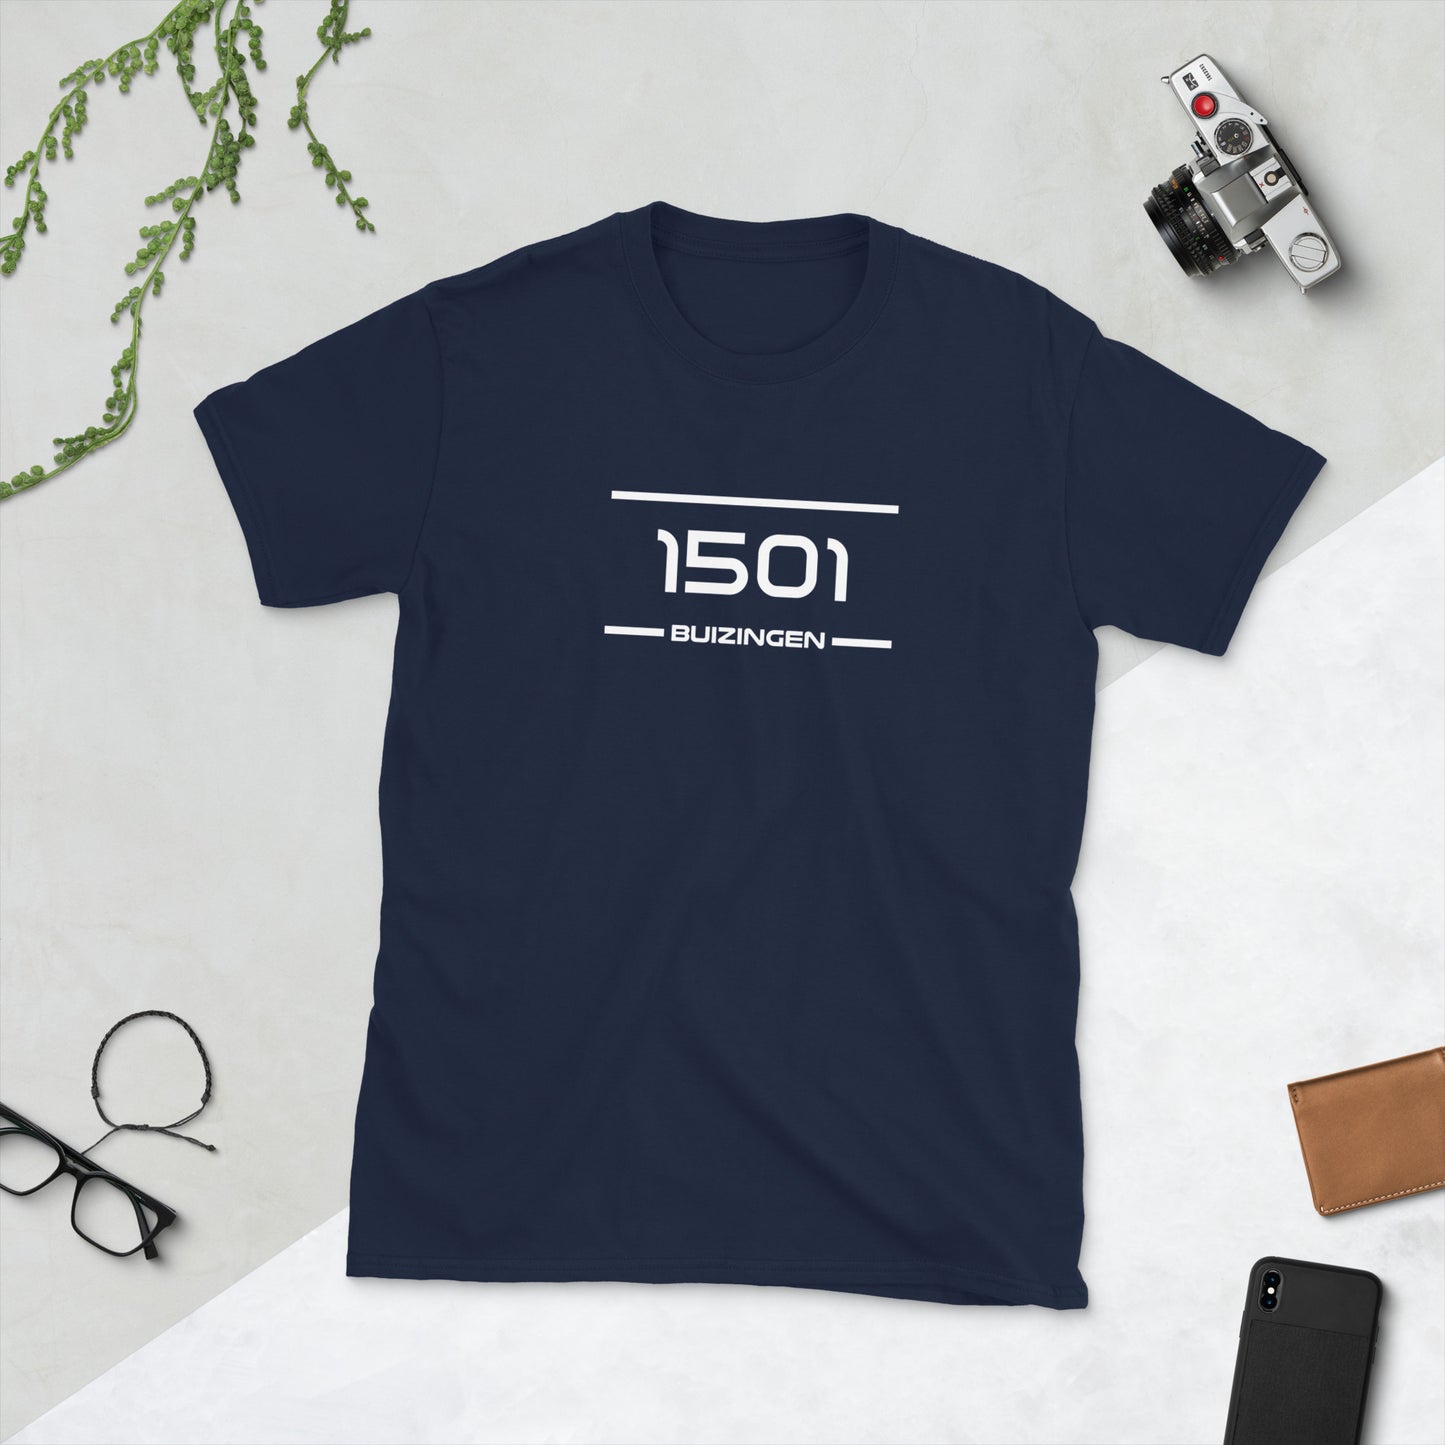 Tshirt - 1501 - Buizingen